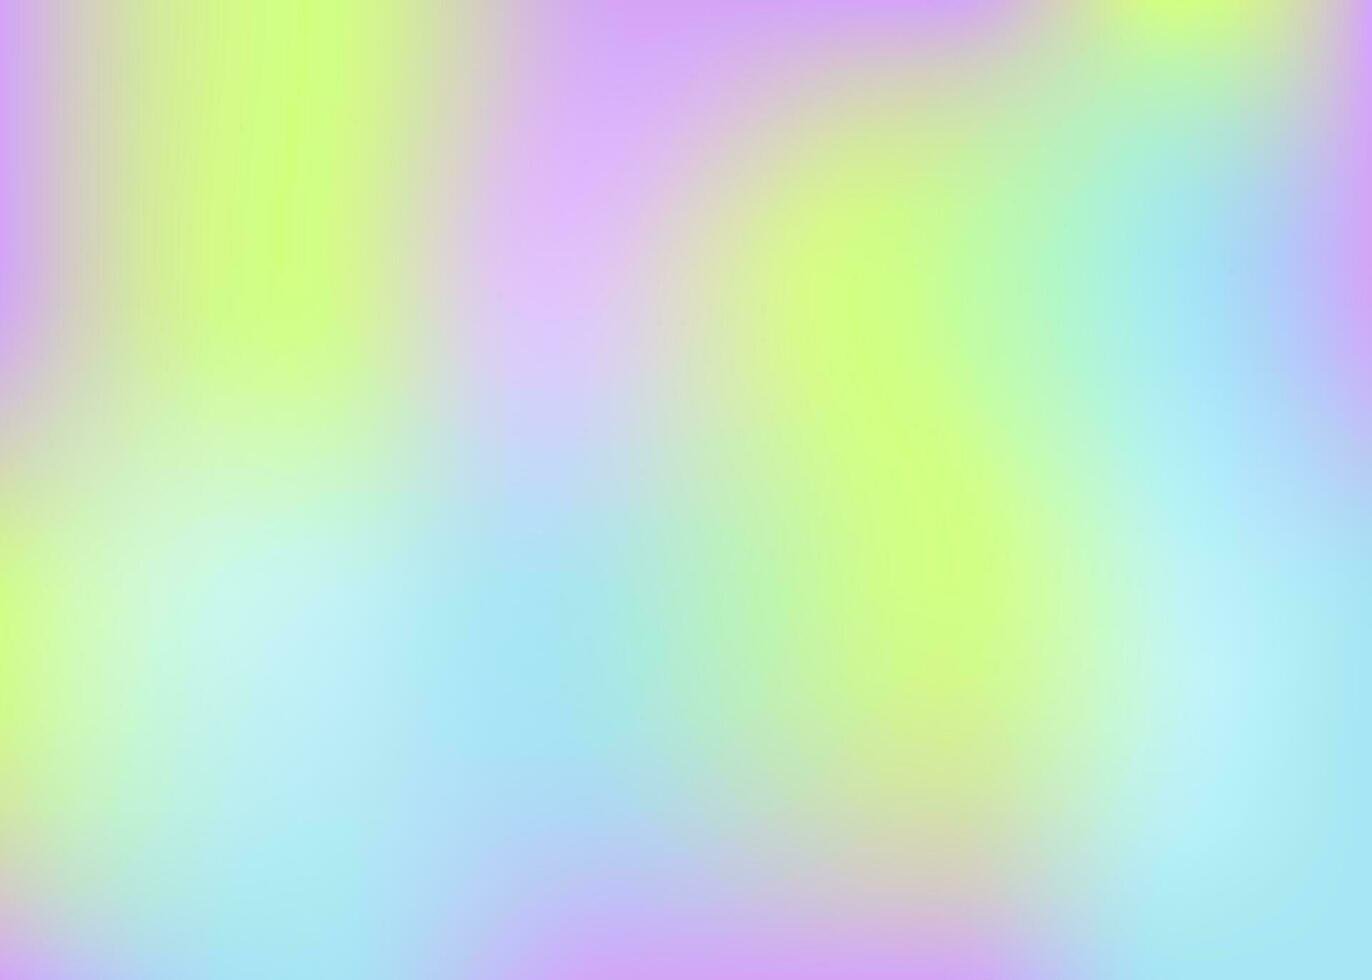 regenboog hologram helling vector achtergrond. luxe modieus inschrijving parelmoer glam overlappen. holografische helling neon vector illustratie modieus pastel regenboog eenhoorn achtergrond.